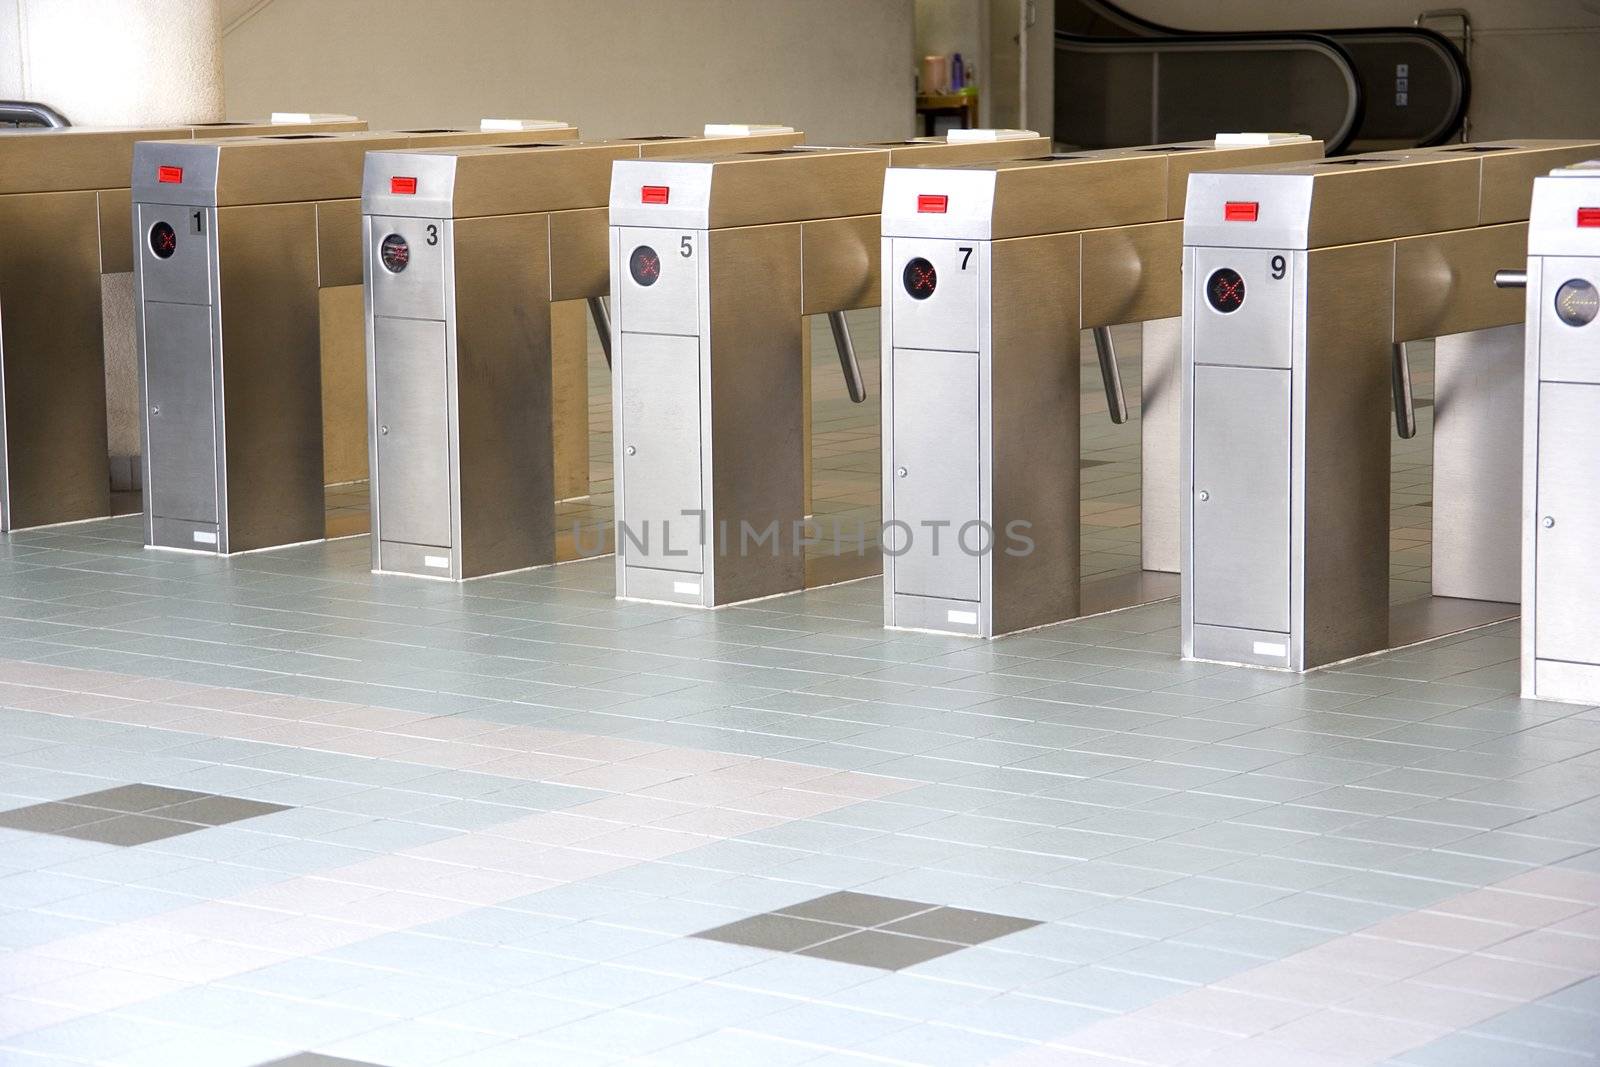 Image of automatic train ticket verification machines.